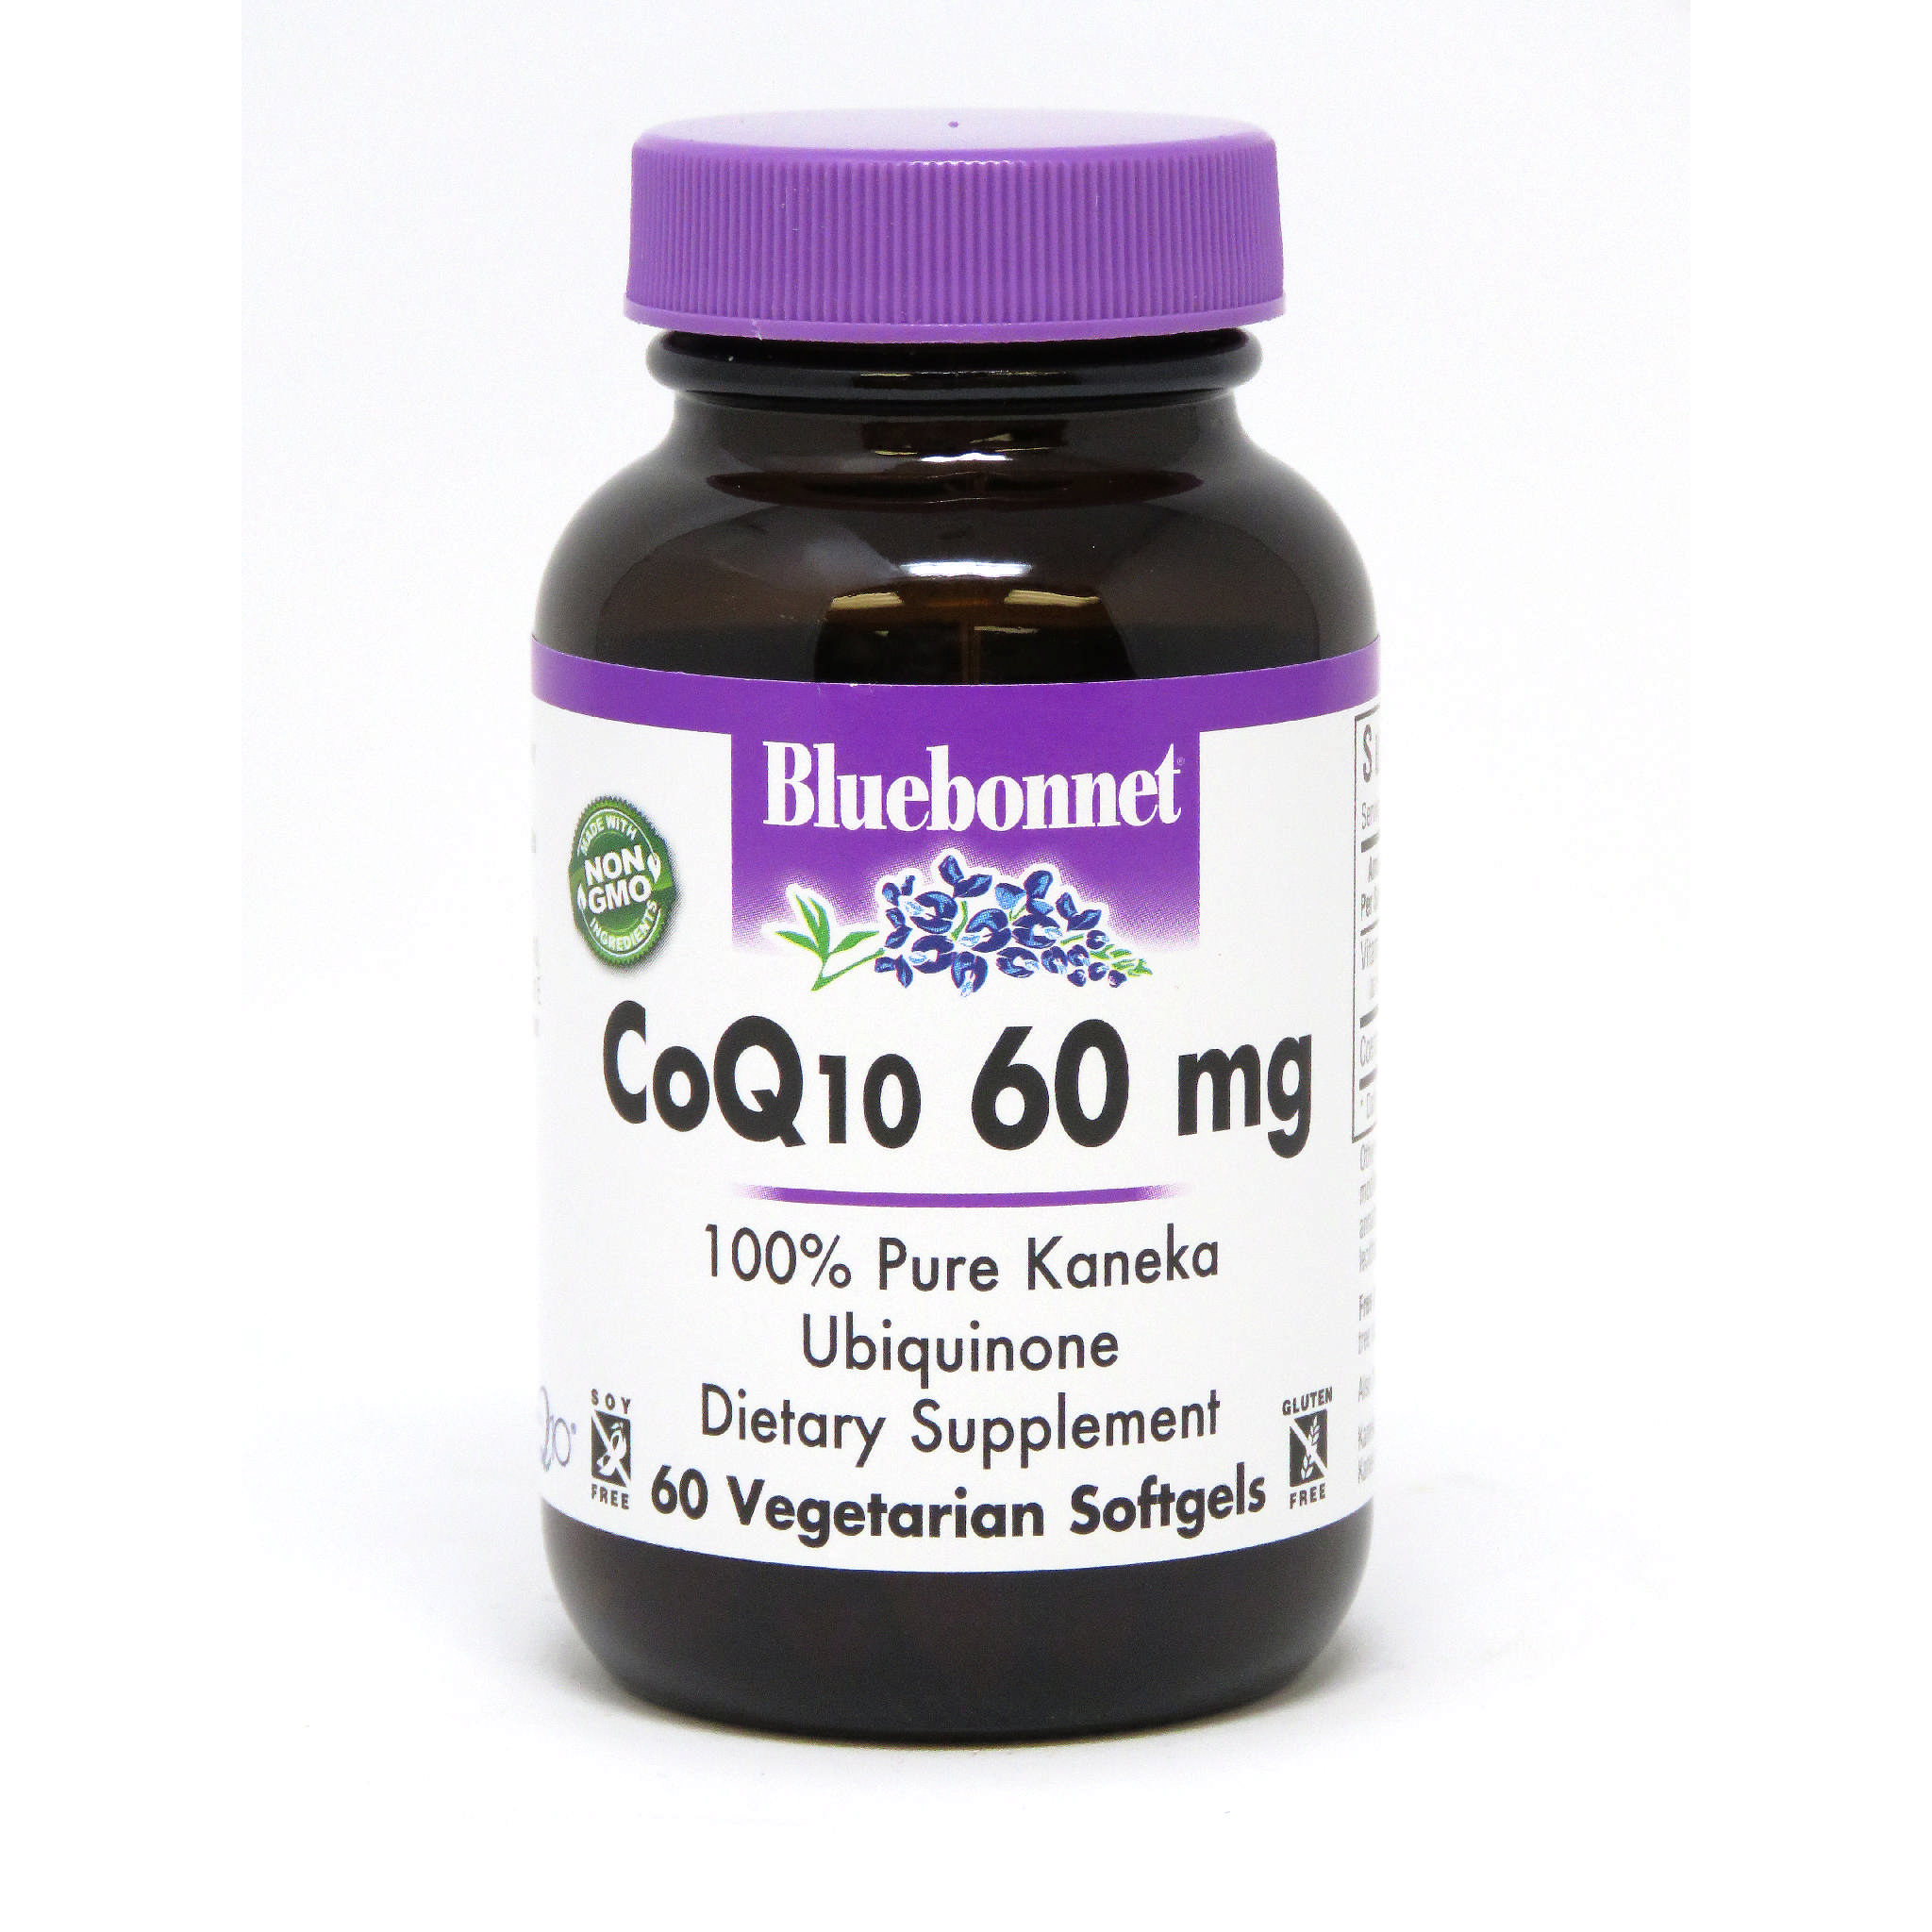 Bluebonnet - Coq10 60 mg